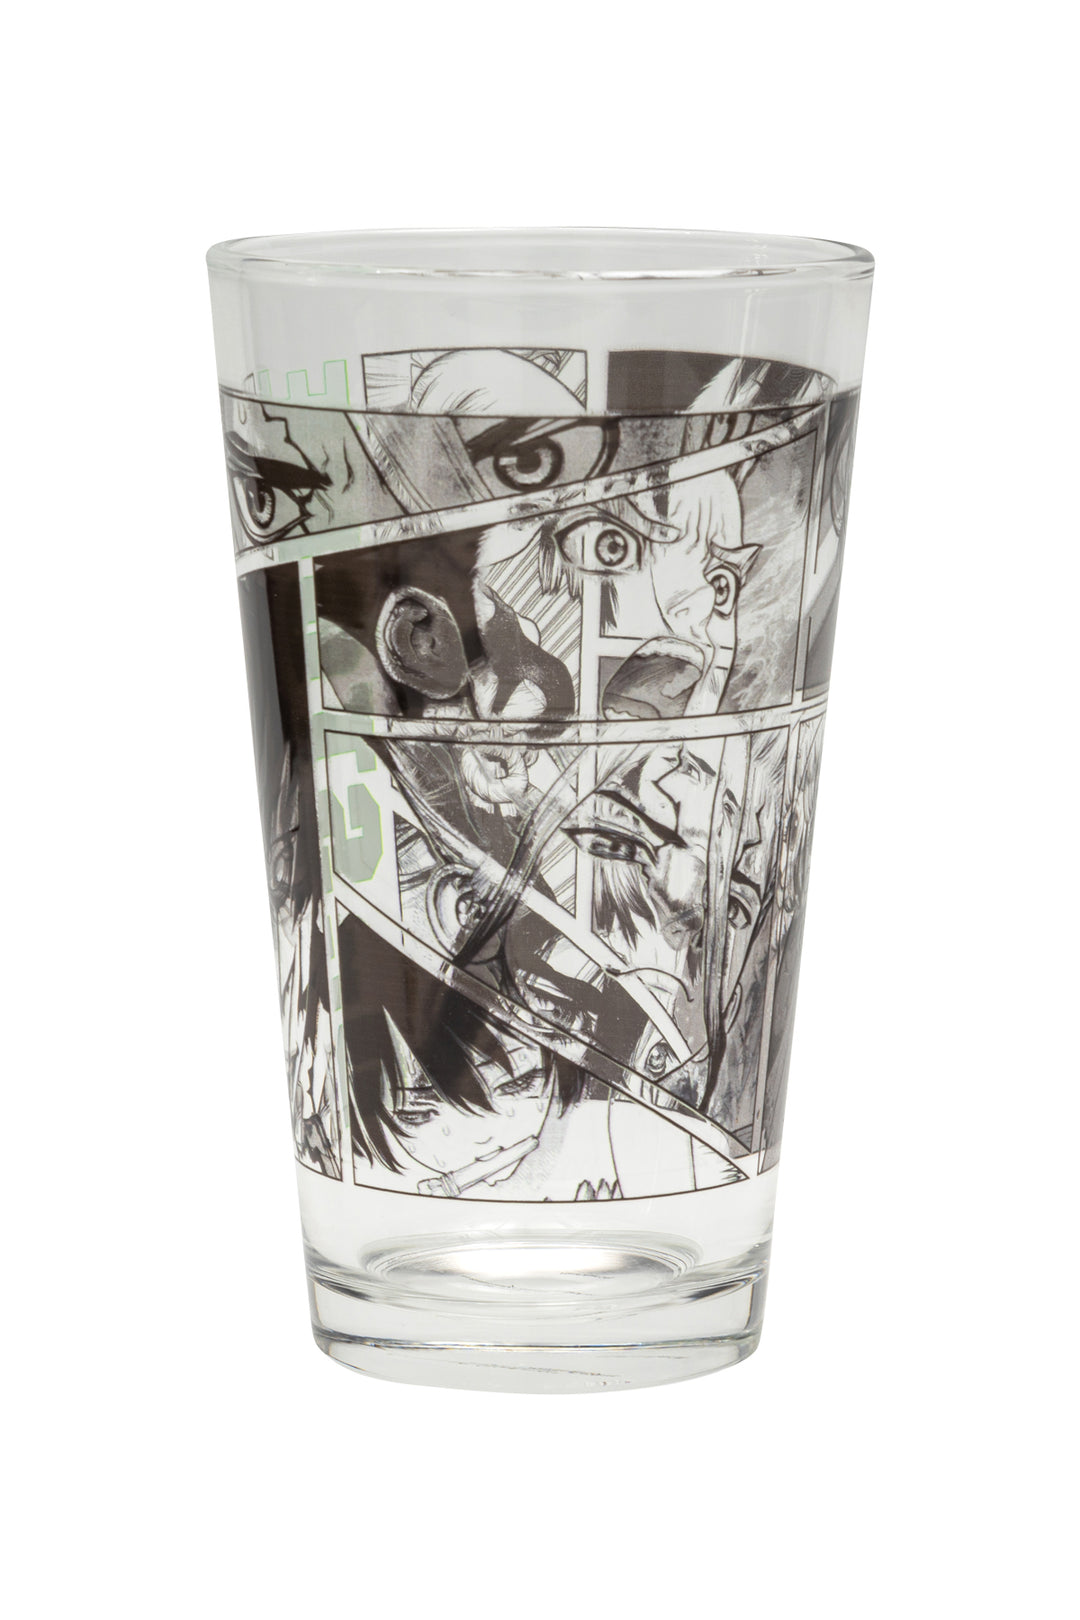 Dr. STONE Manga Panel Pint Glass Set - Set of Two